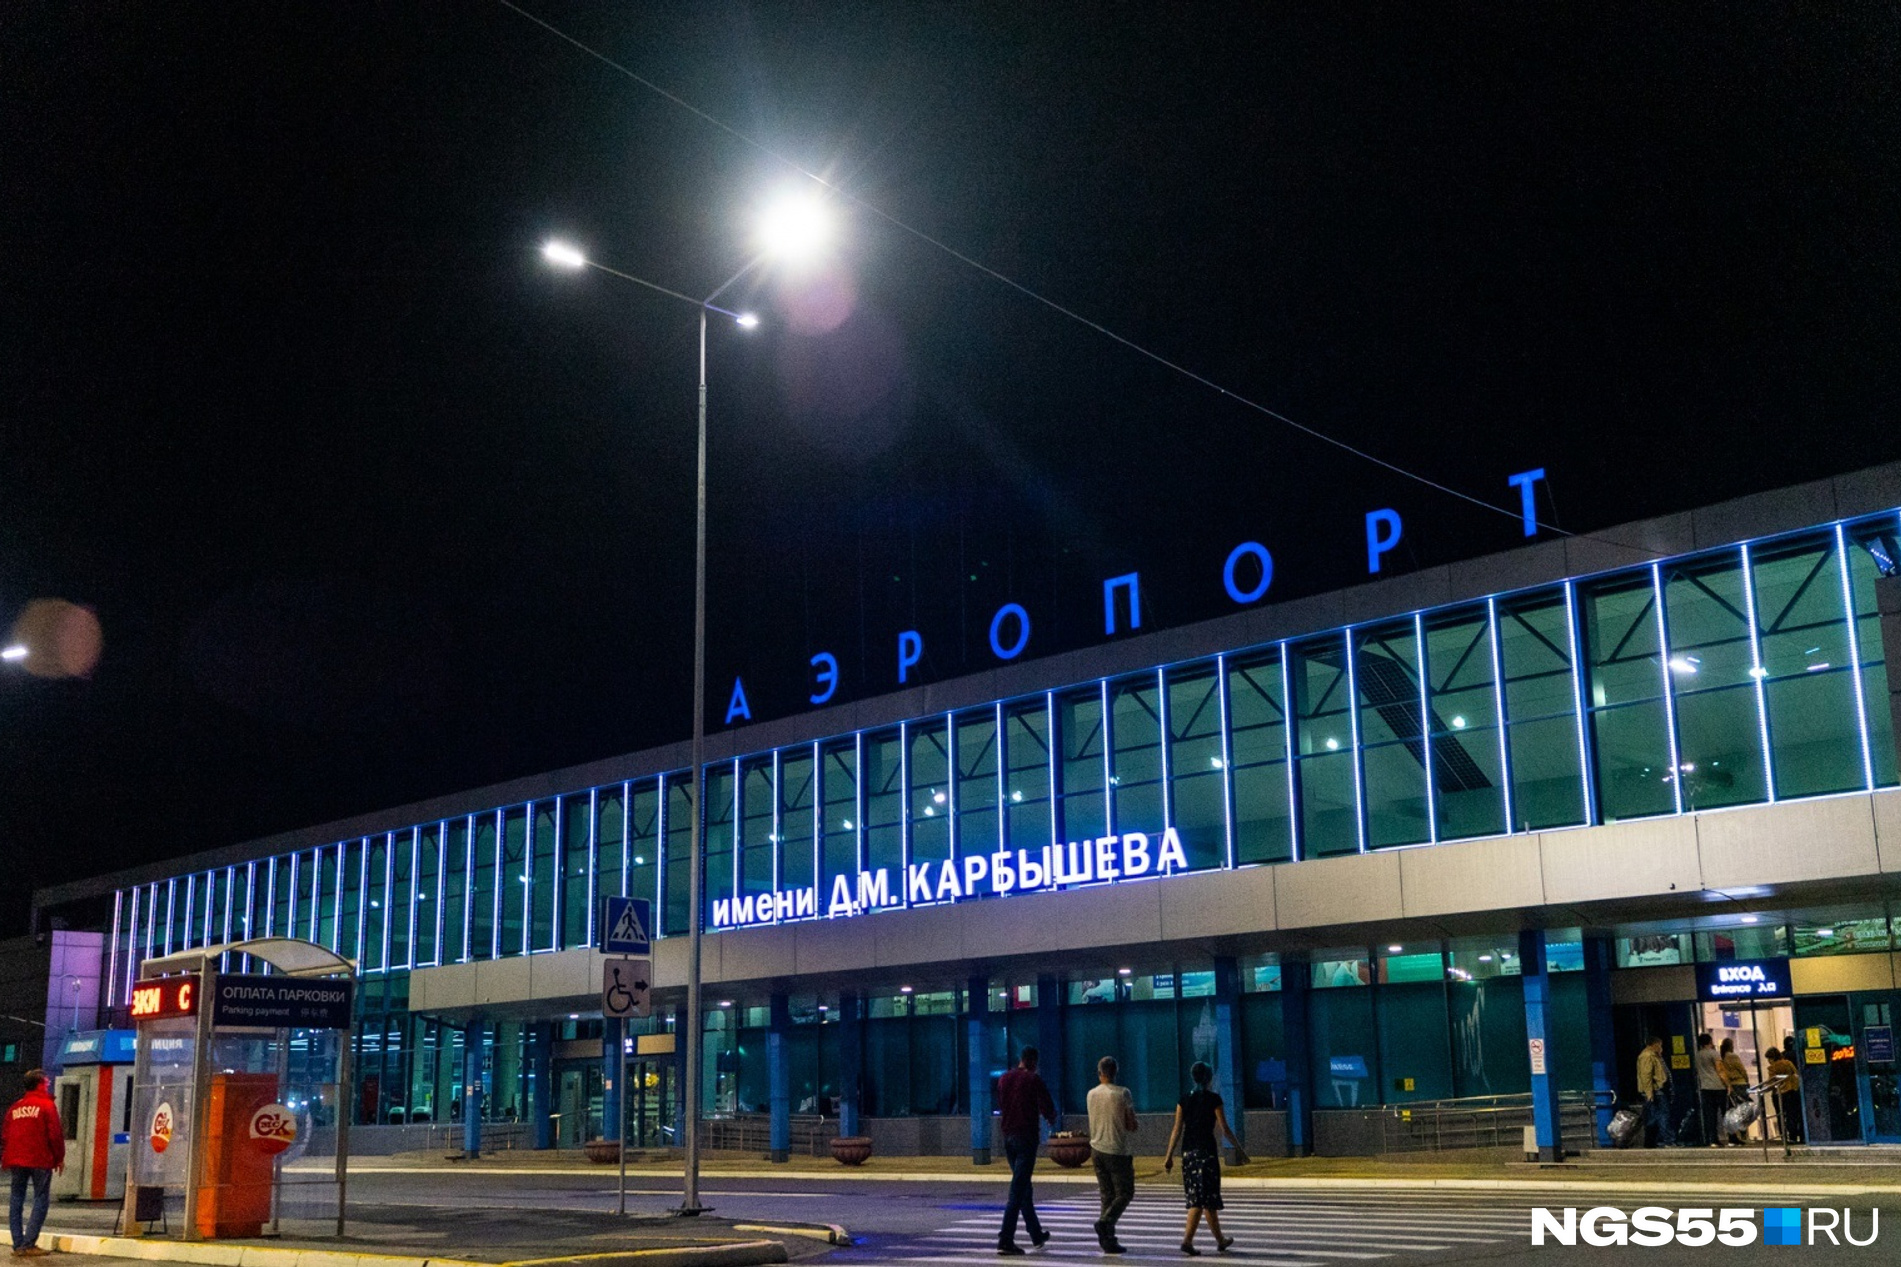 Аэропорт омск телефон. Аэропорт Карбышева Омск. Омский аэропорт зима. Омский аэропорт зимой. Омский аэропорт ночью зимой.